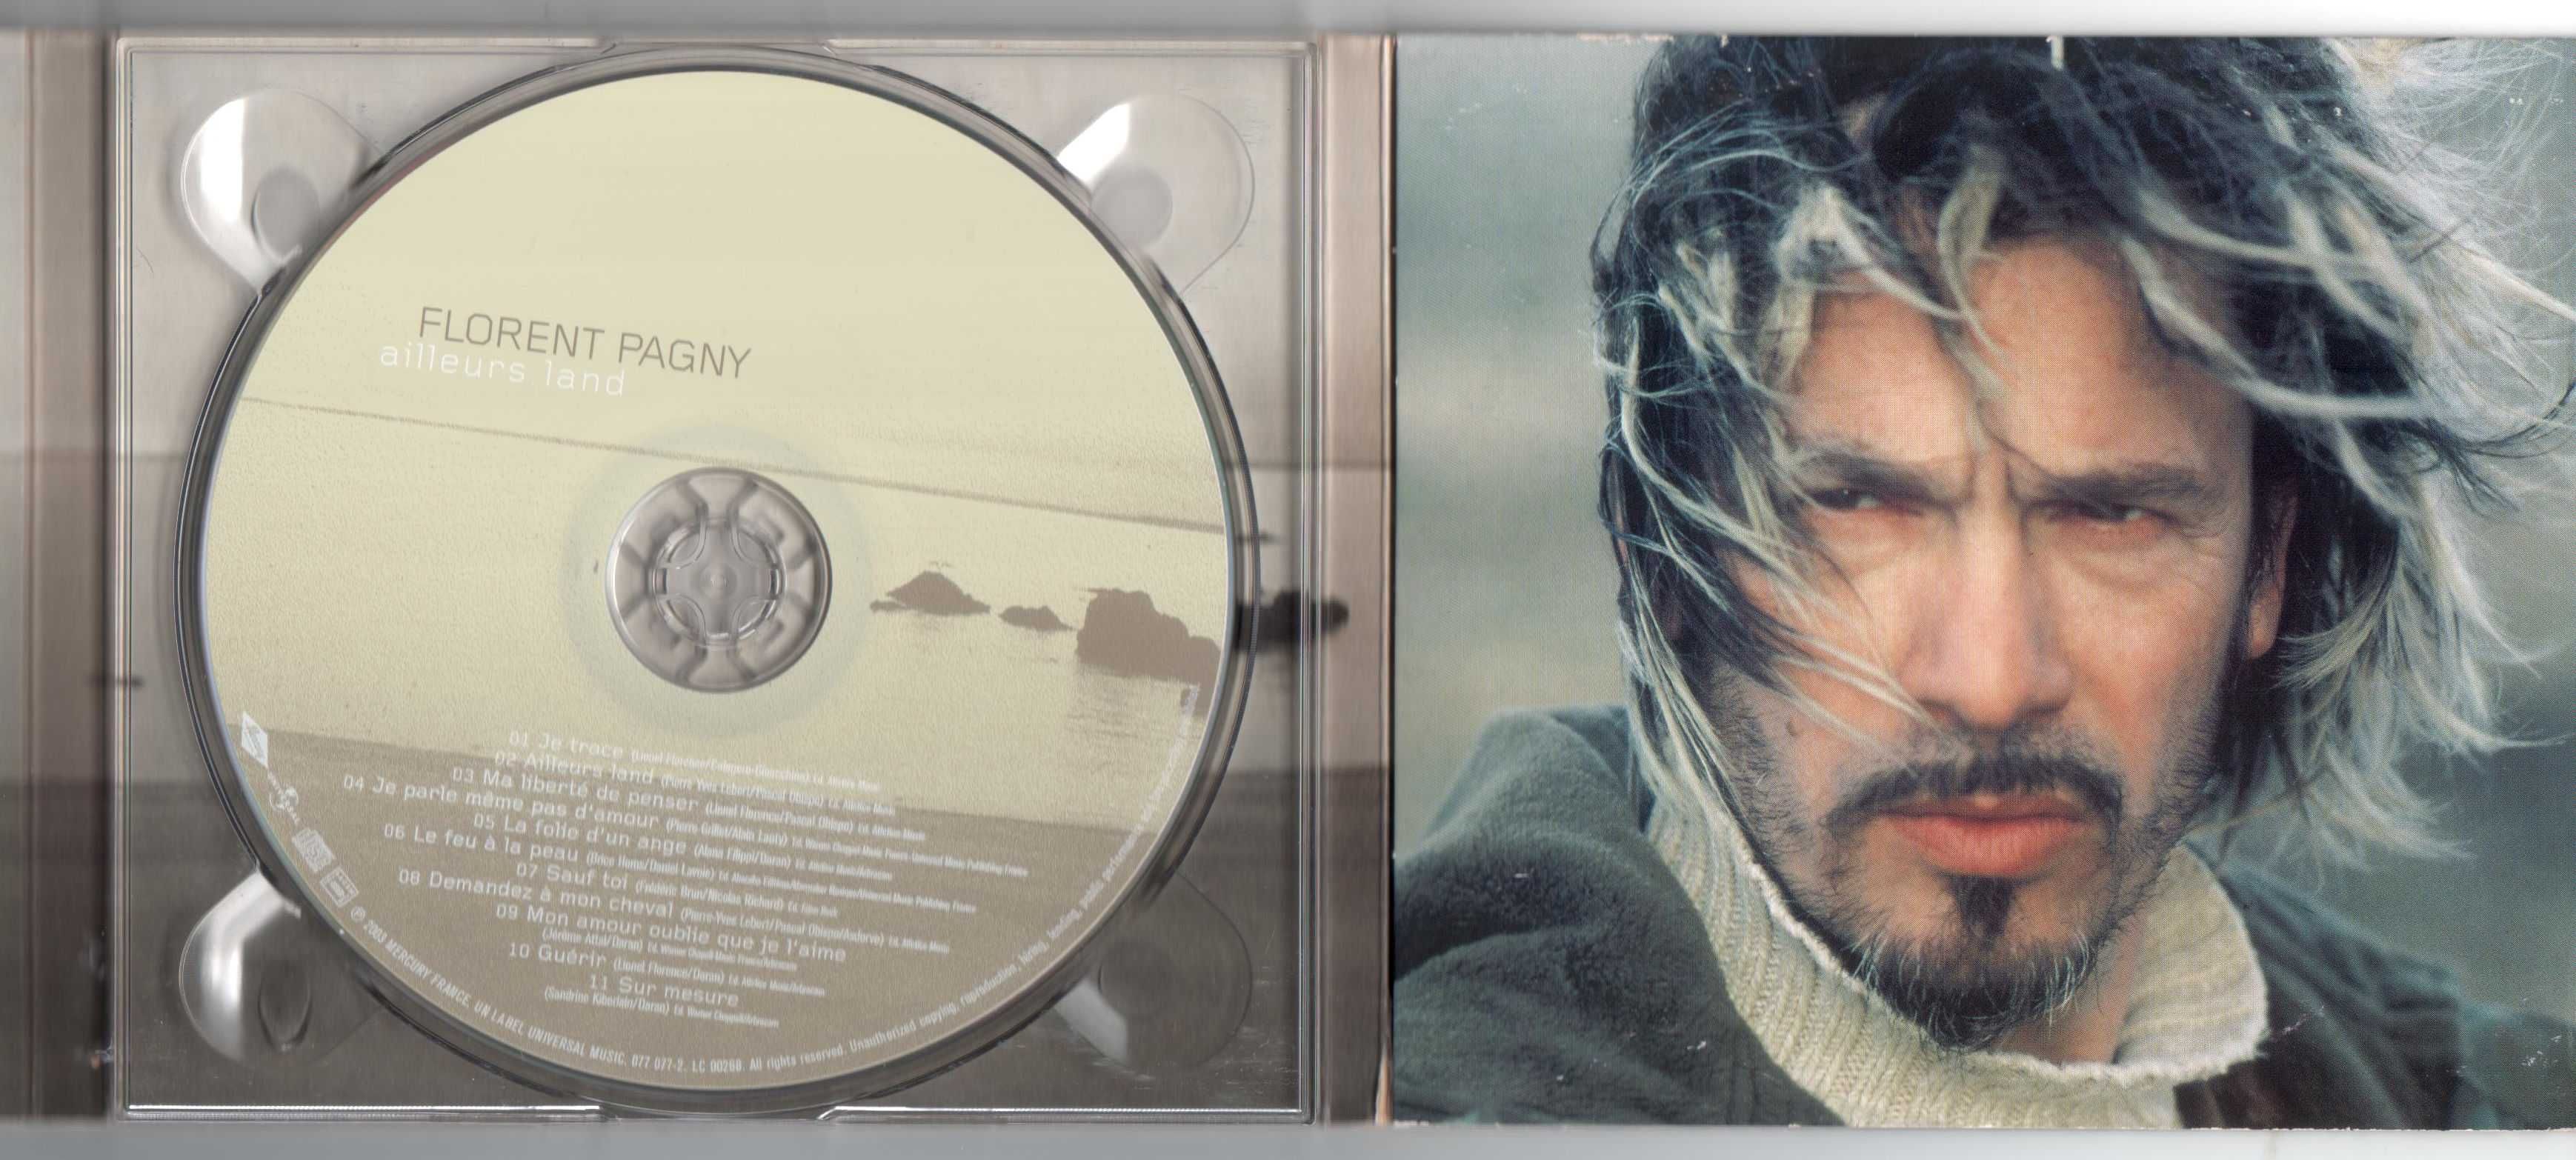 CD Florent Pagny - Ailleurs Land